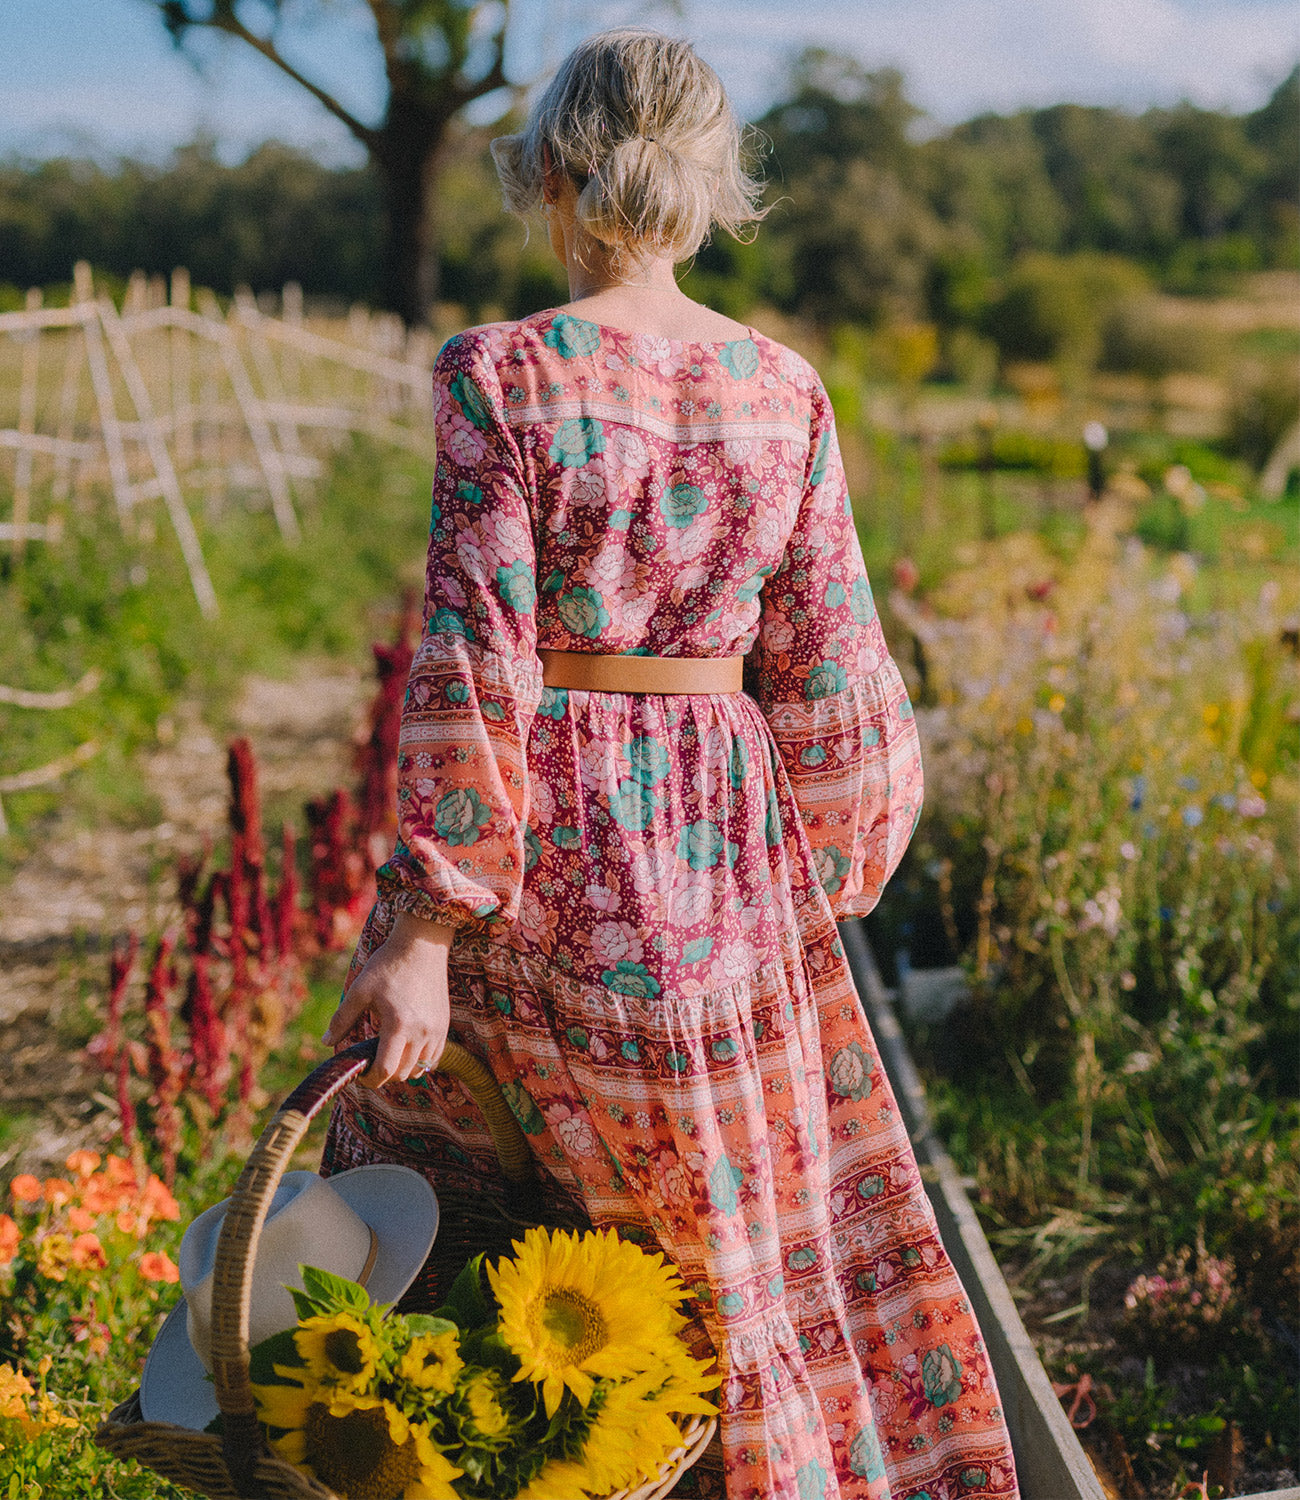 Jodi Flockhart wears the Arnhem Sundress in Ruby in the flower fields at Sault on Dalesford